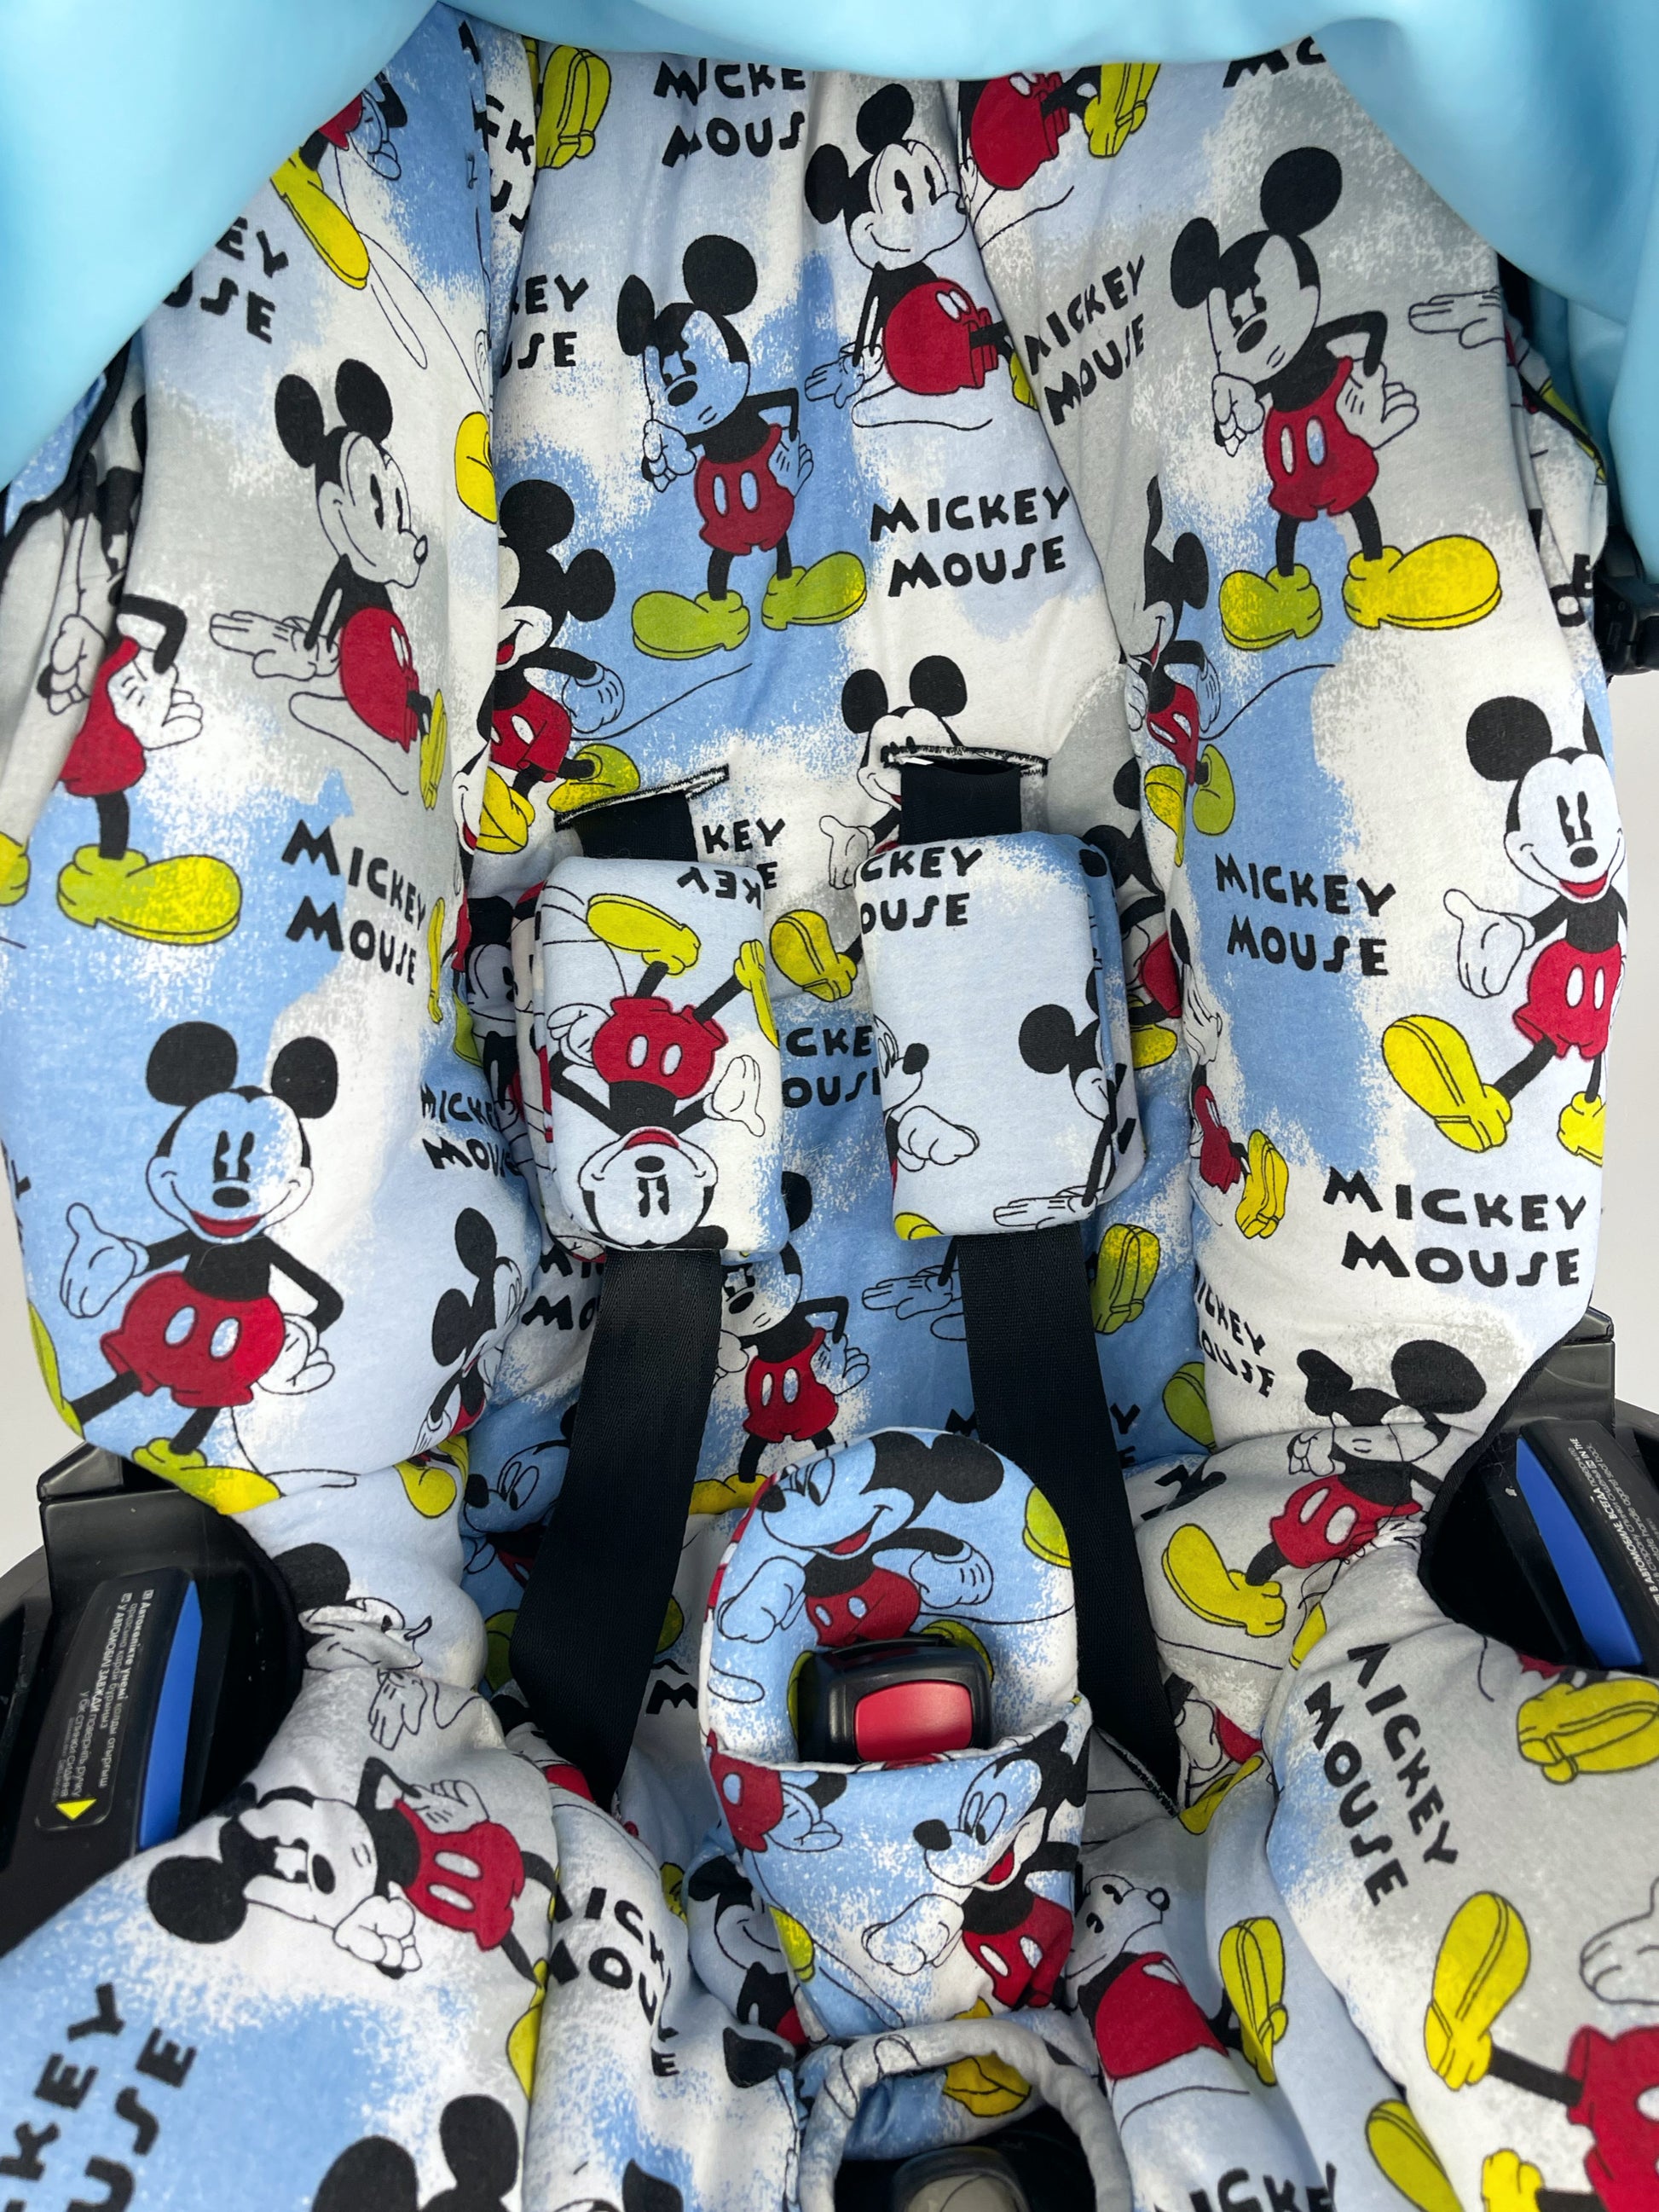 18pcs/set plush Cartoon Mickey Mouse universal car seat cover